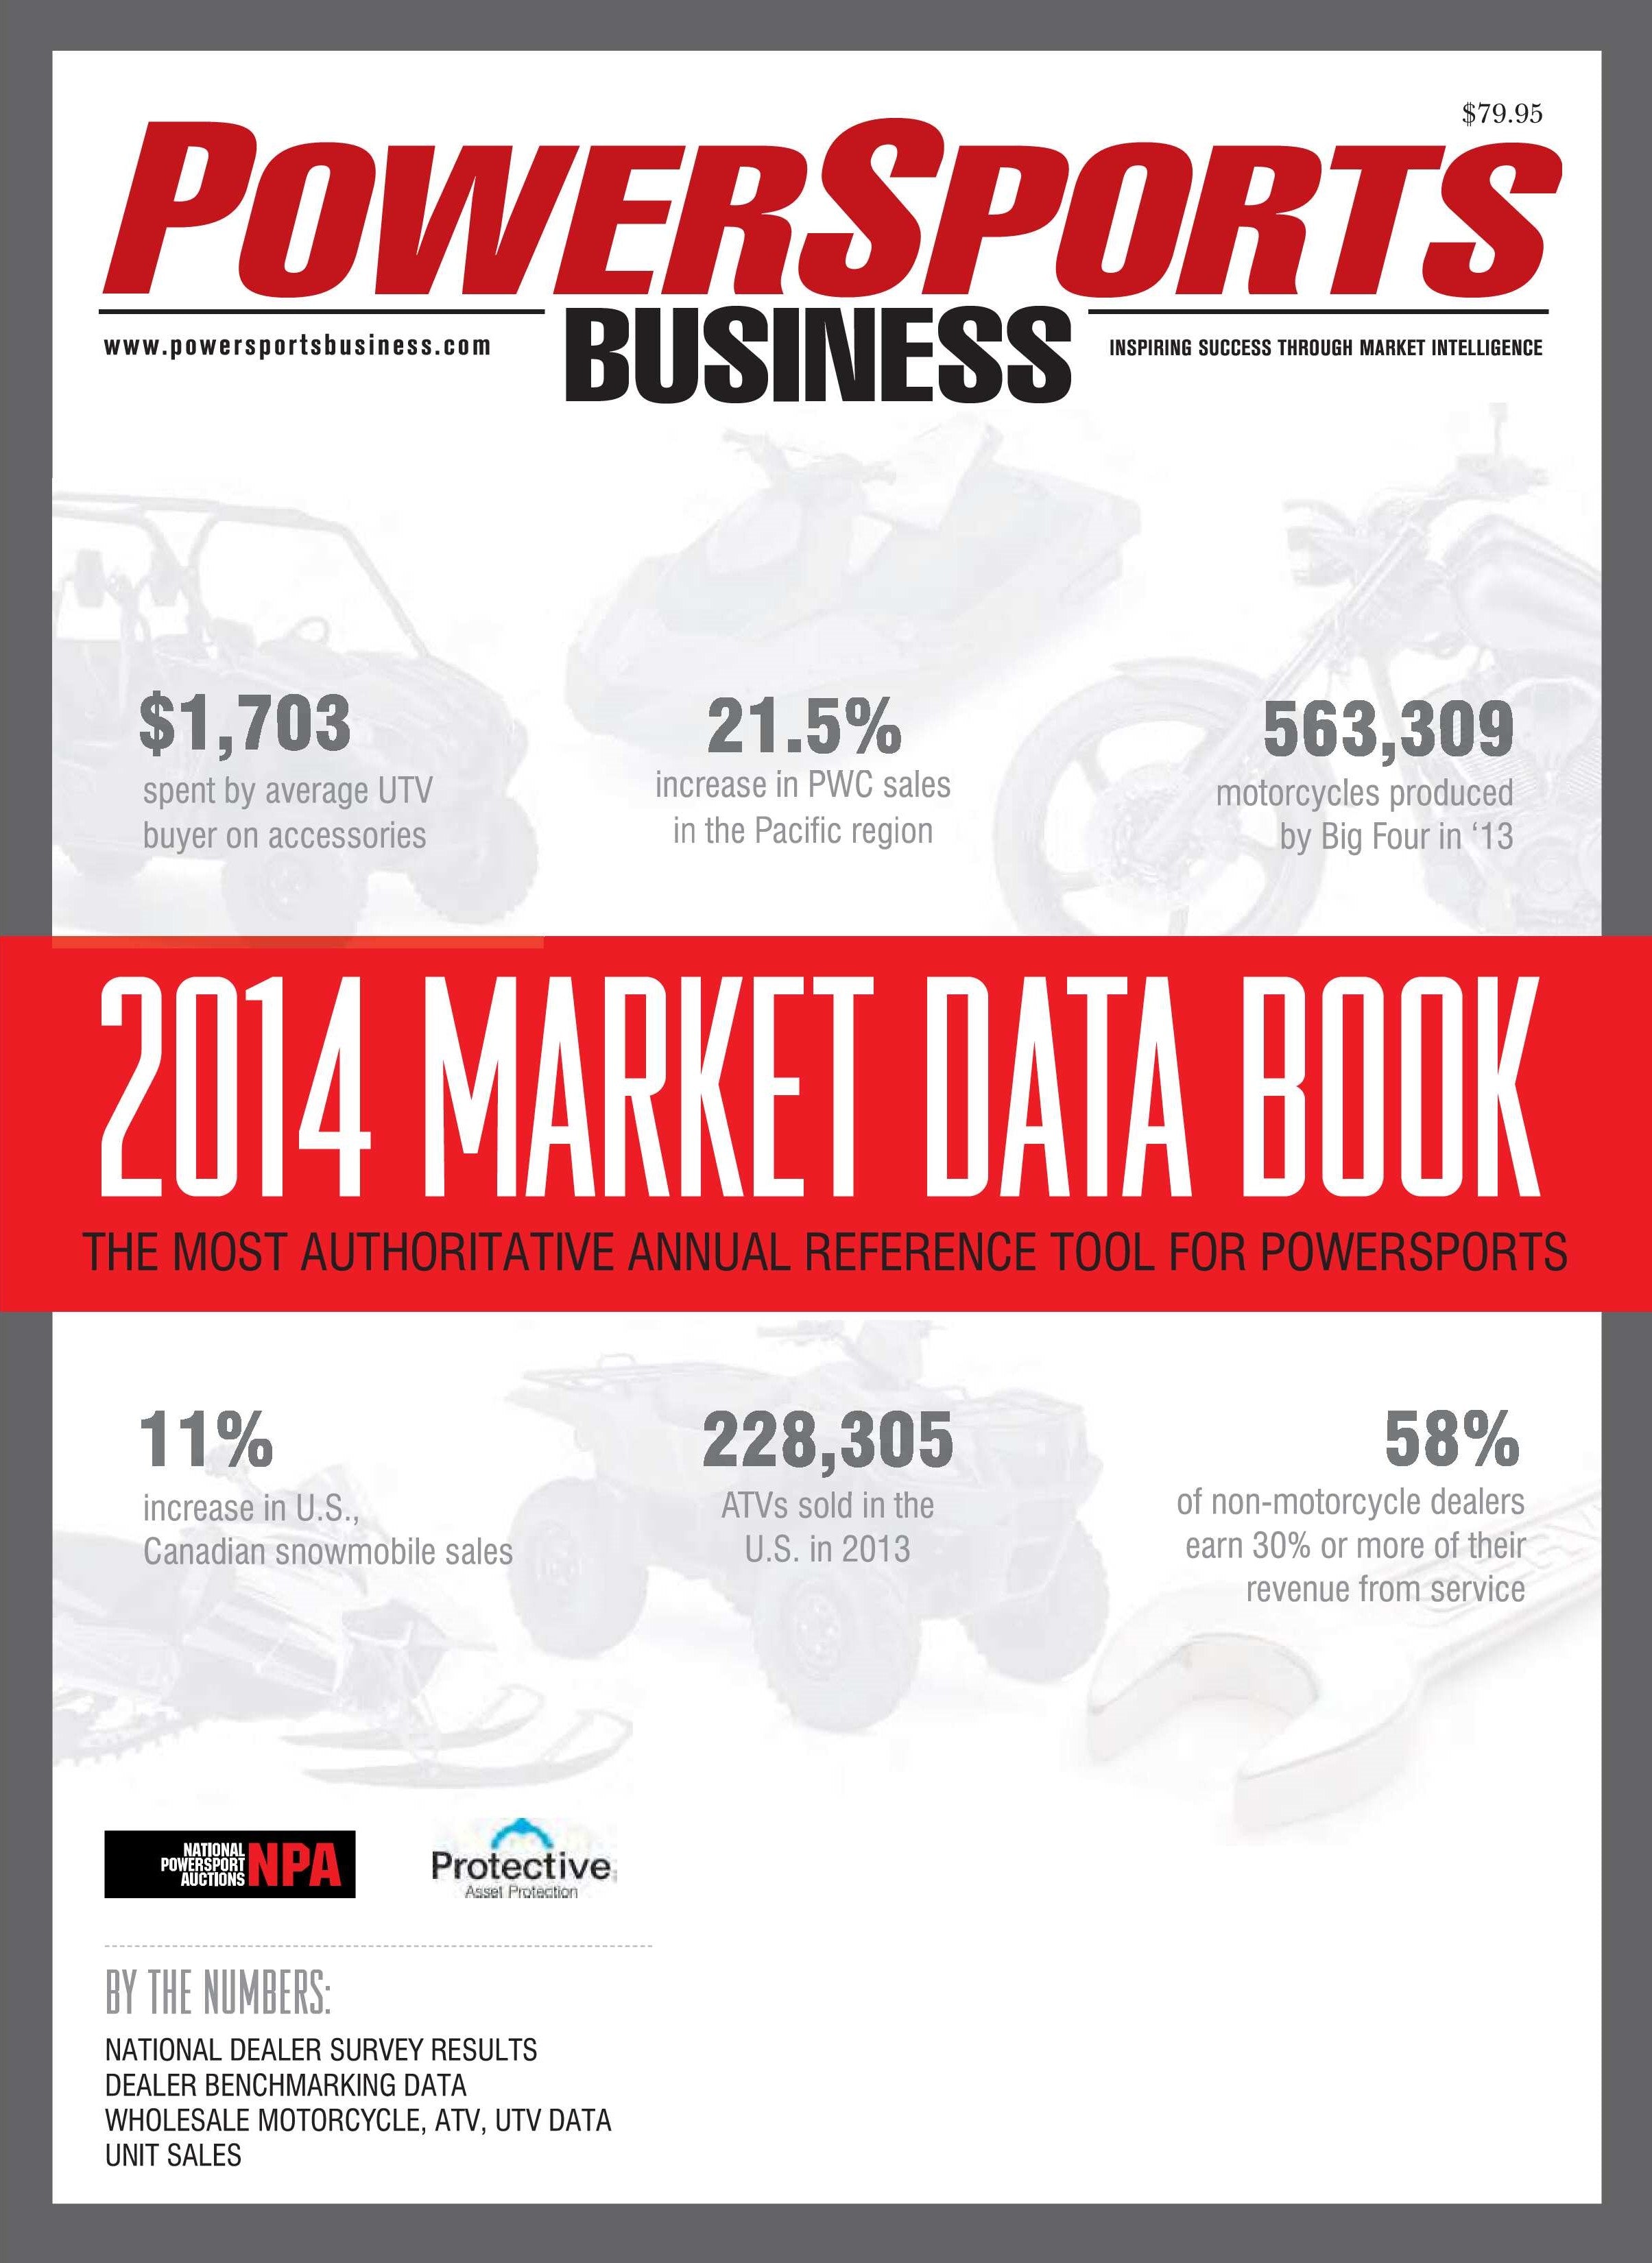 Powersports Business 2014 Market Data Book